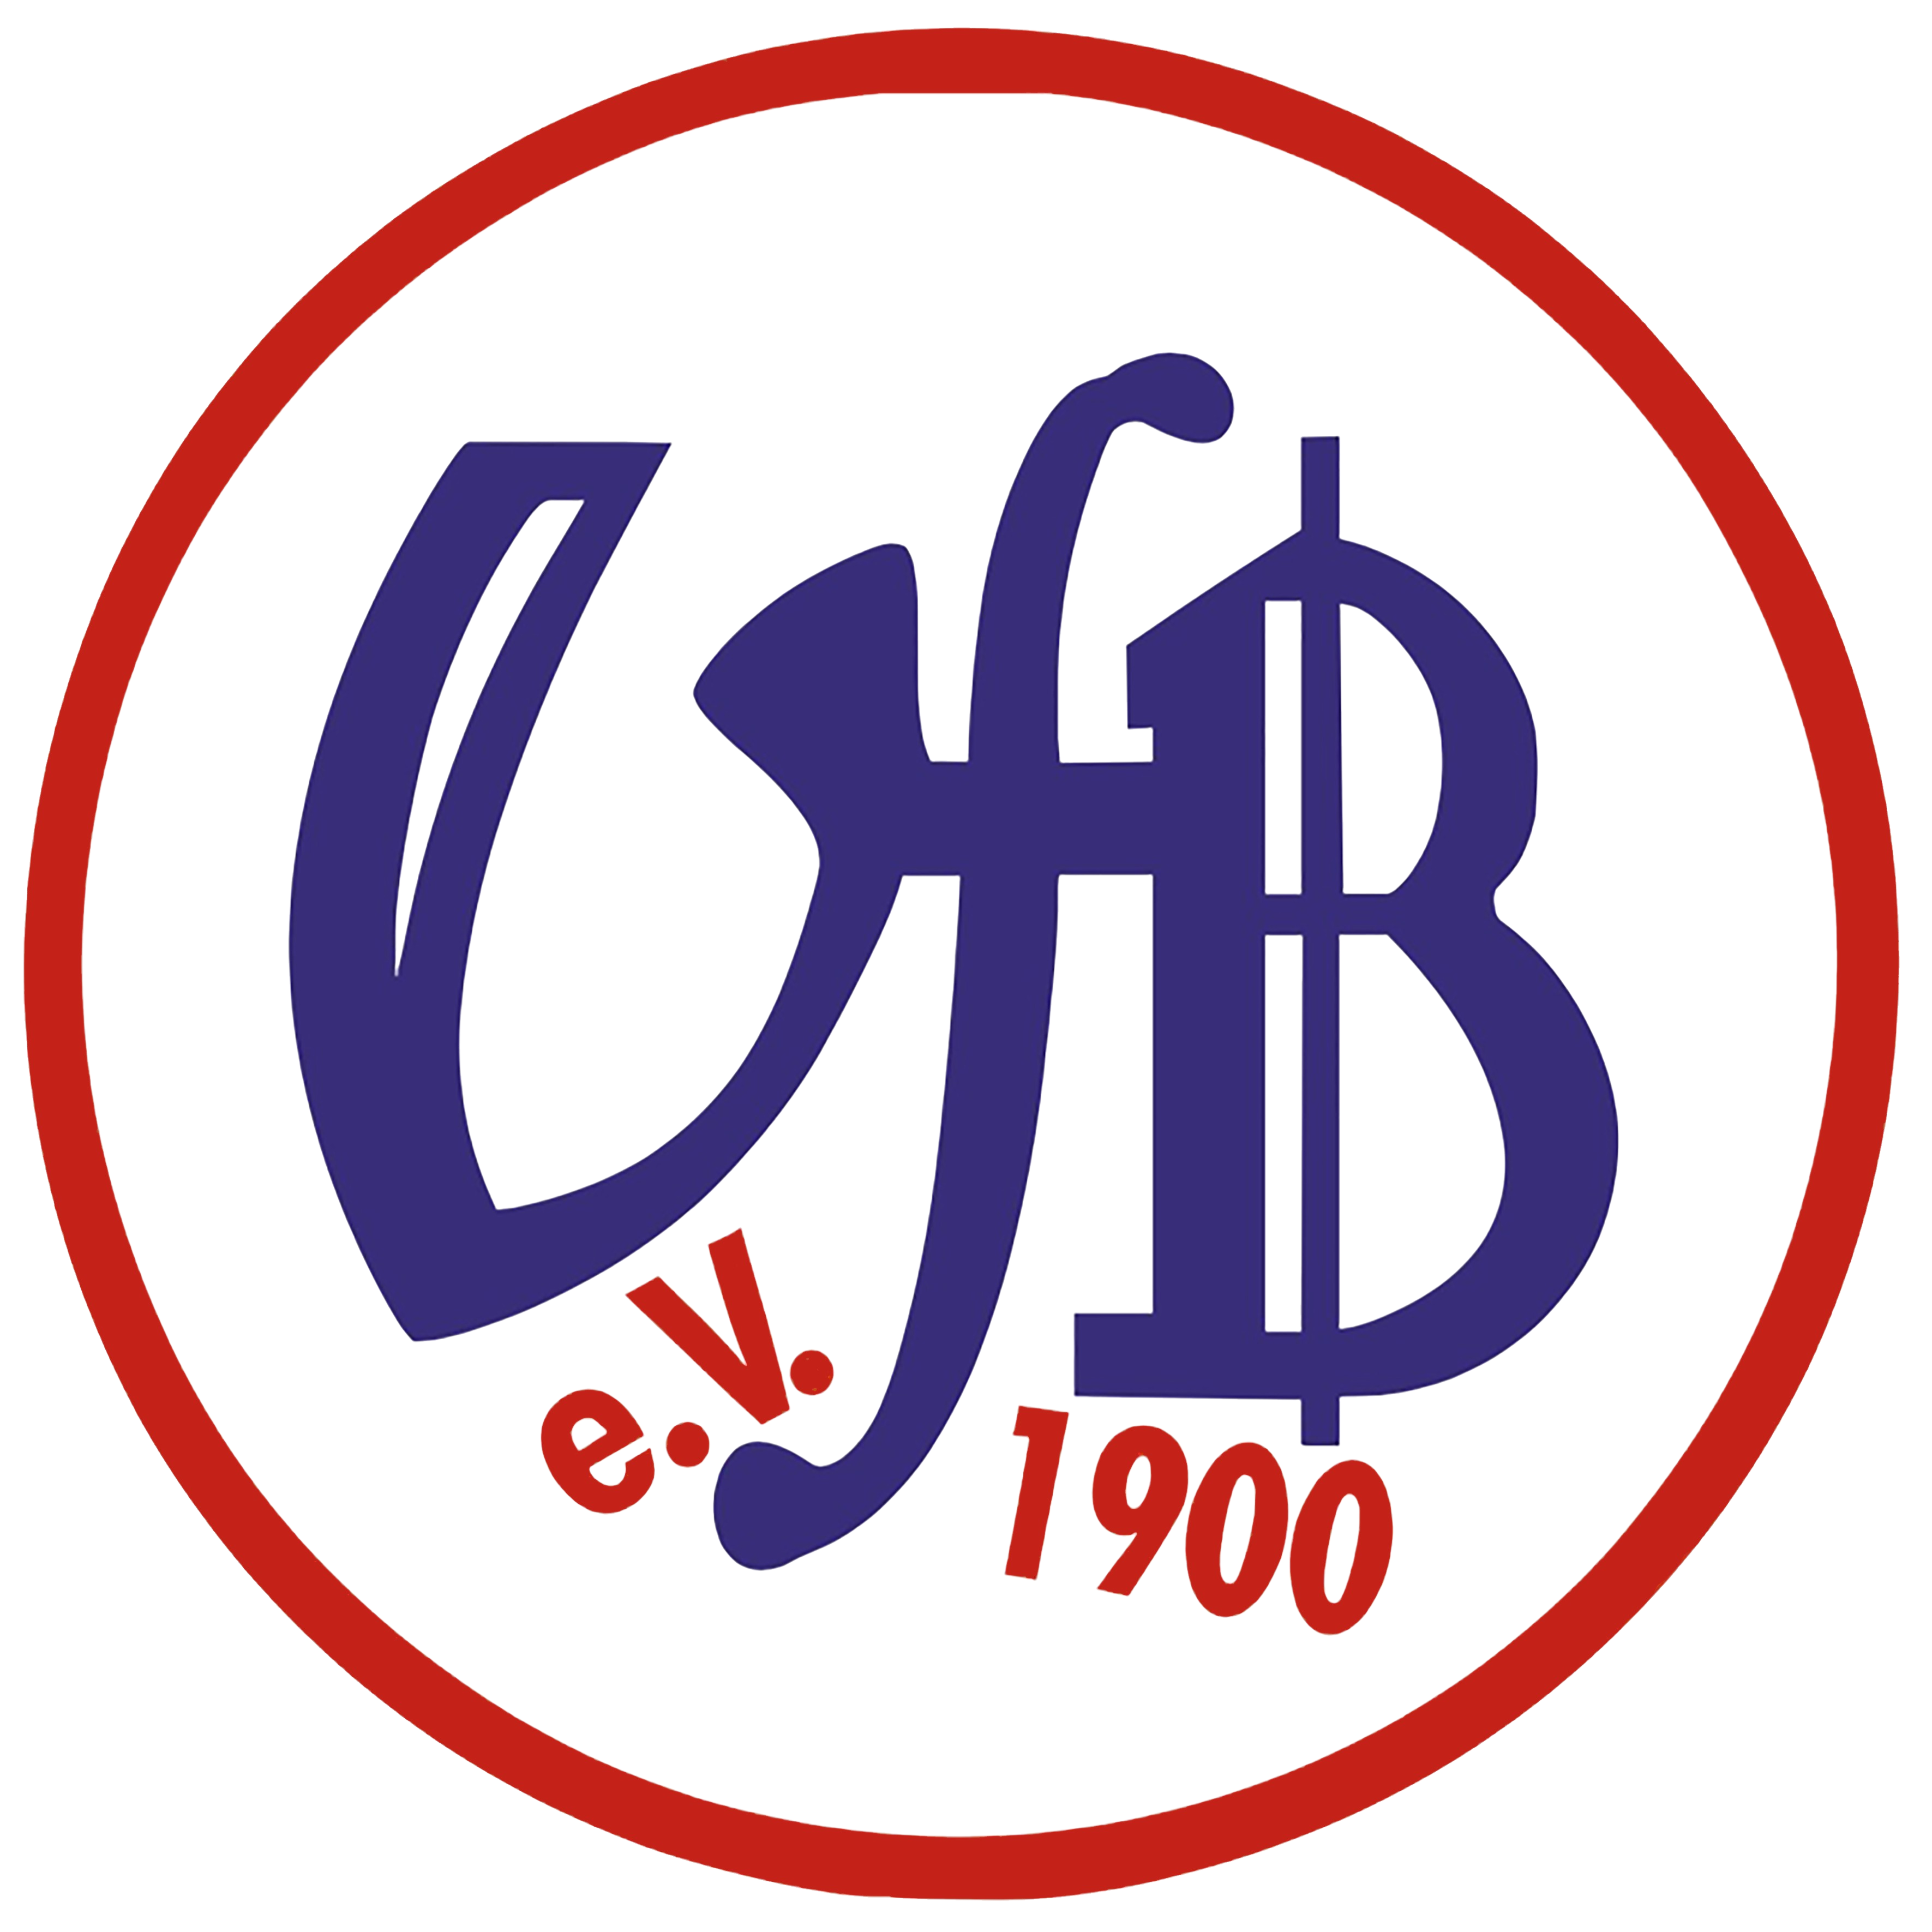 VfB 1900 Offenbach e.V.